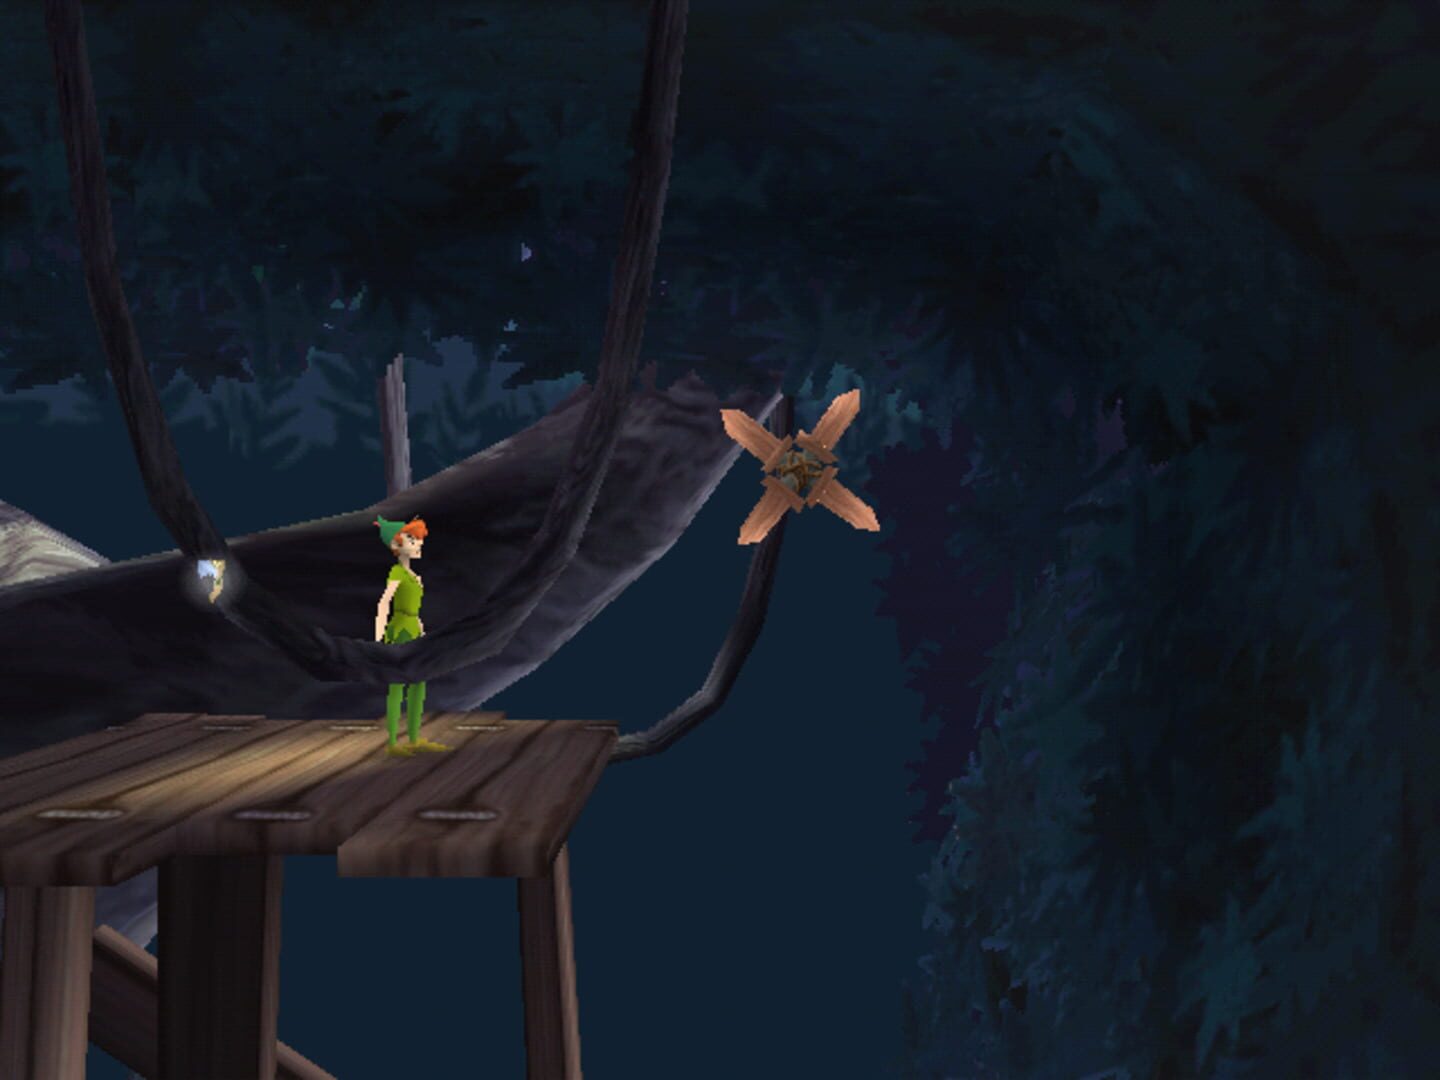 Captura de pantalla - Peter Pan in Disney's Return to Never Land